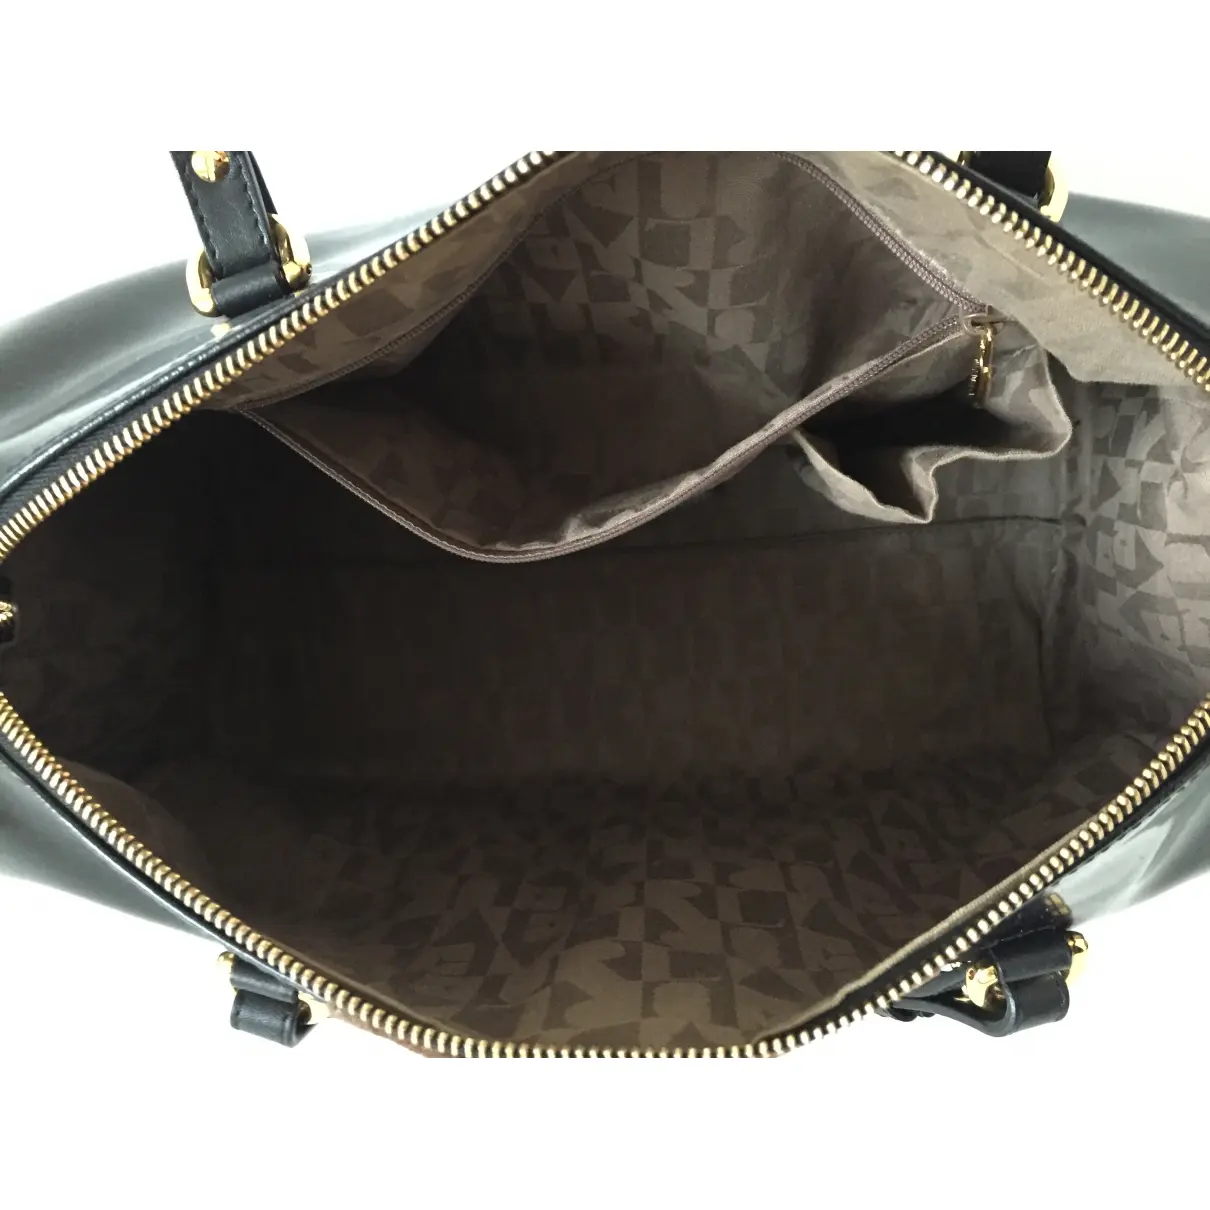 Candy Bag patent leather handbag Furla